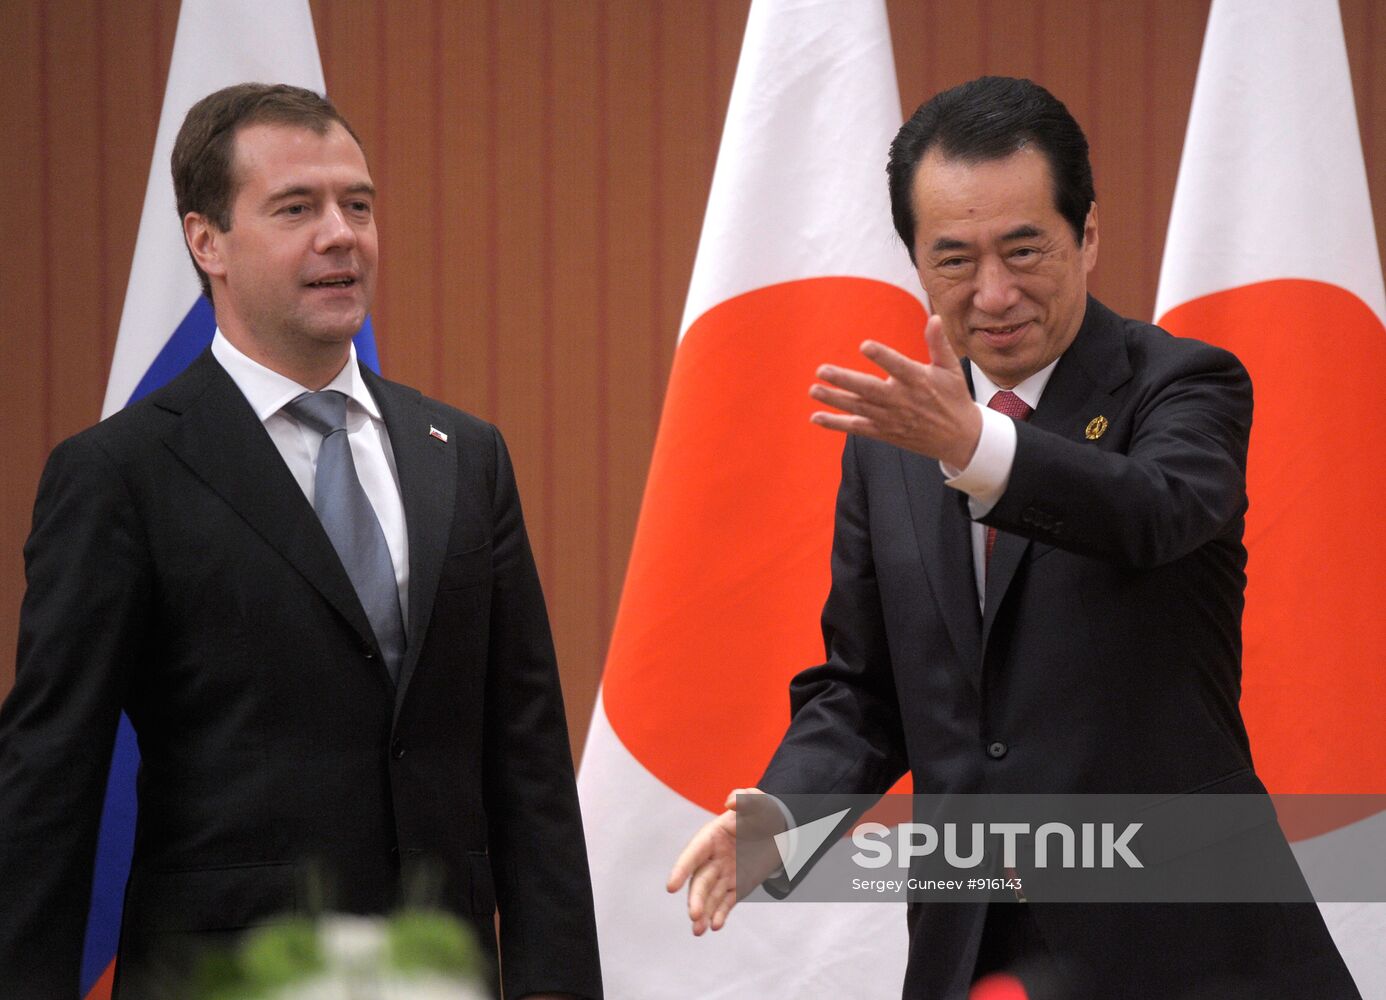 Dmitry Medvedev attends G8 summit in Deauville